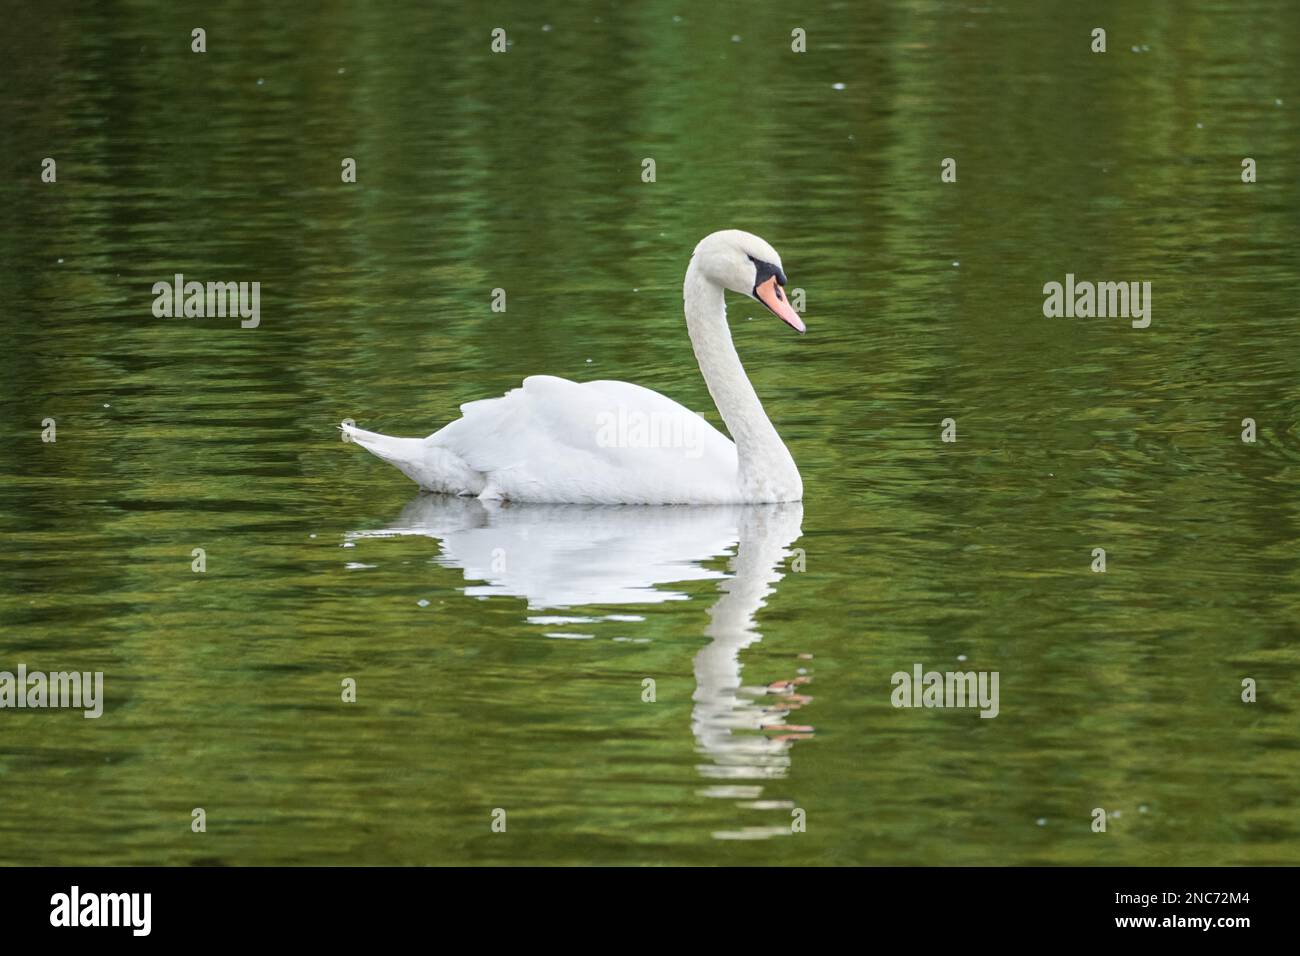 Mute swan swimming on a lake Stock Photo